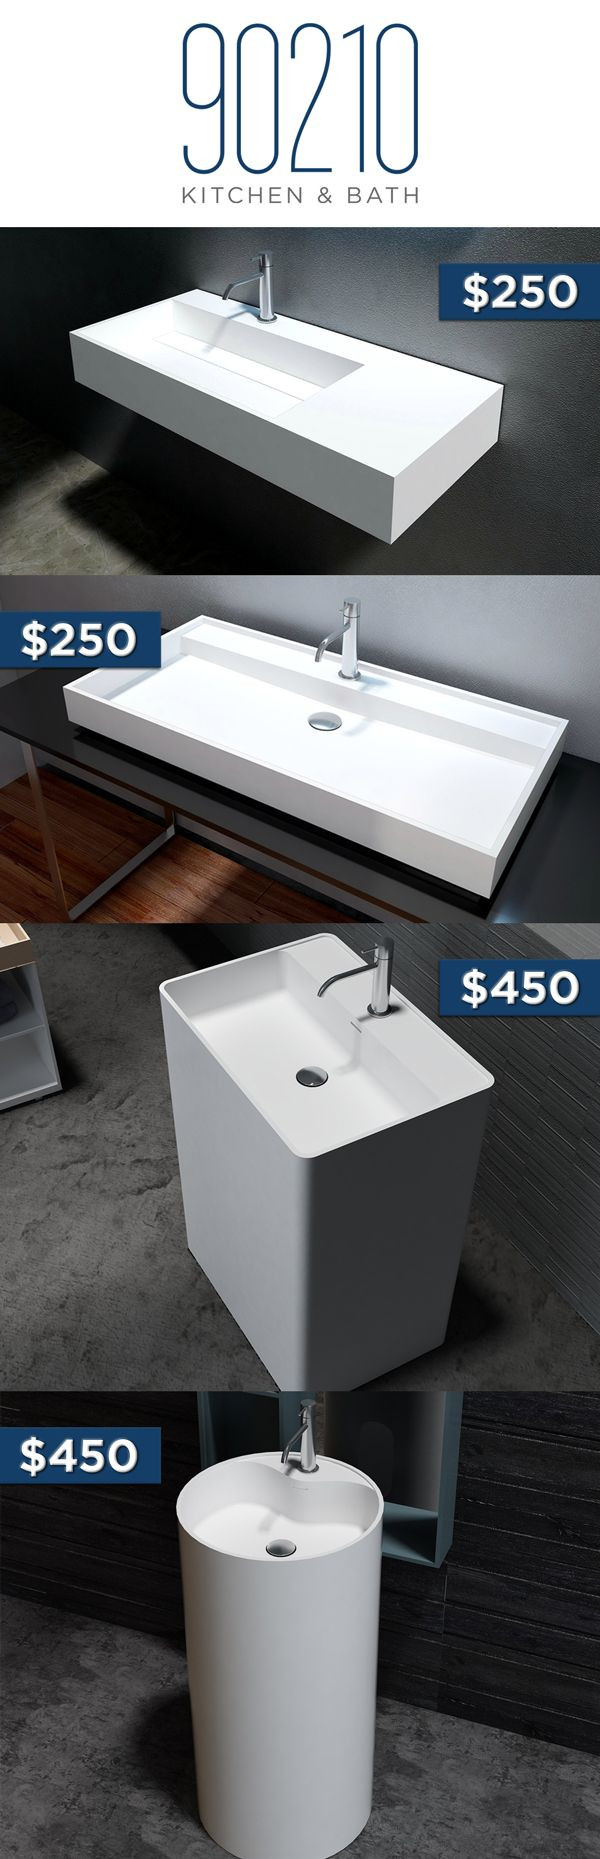 Bathroom Vanities Under $500
 4 Vessel sink ideas under $500